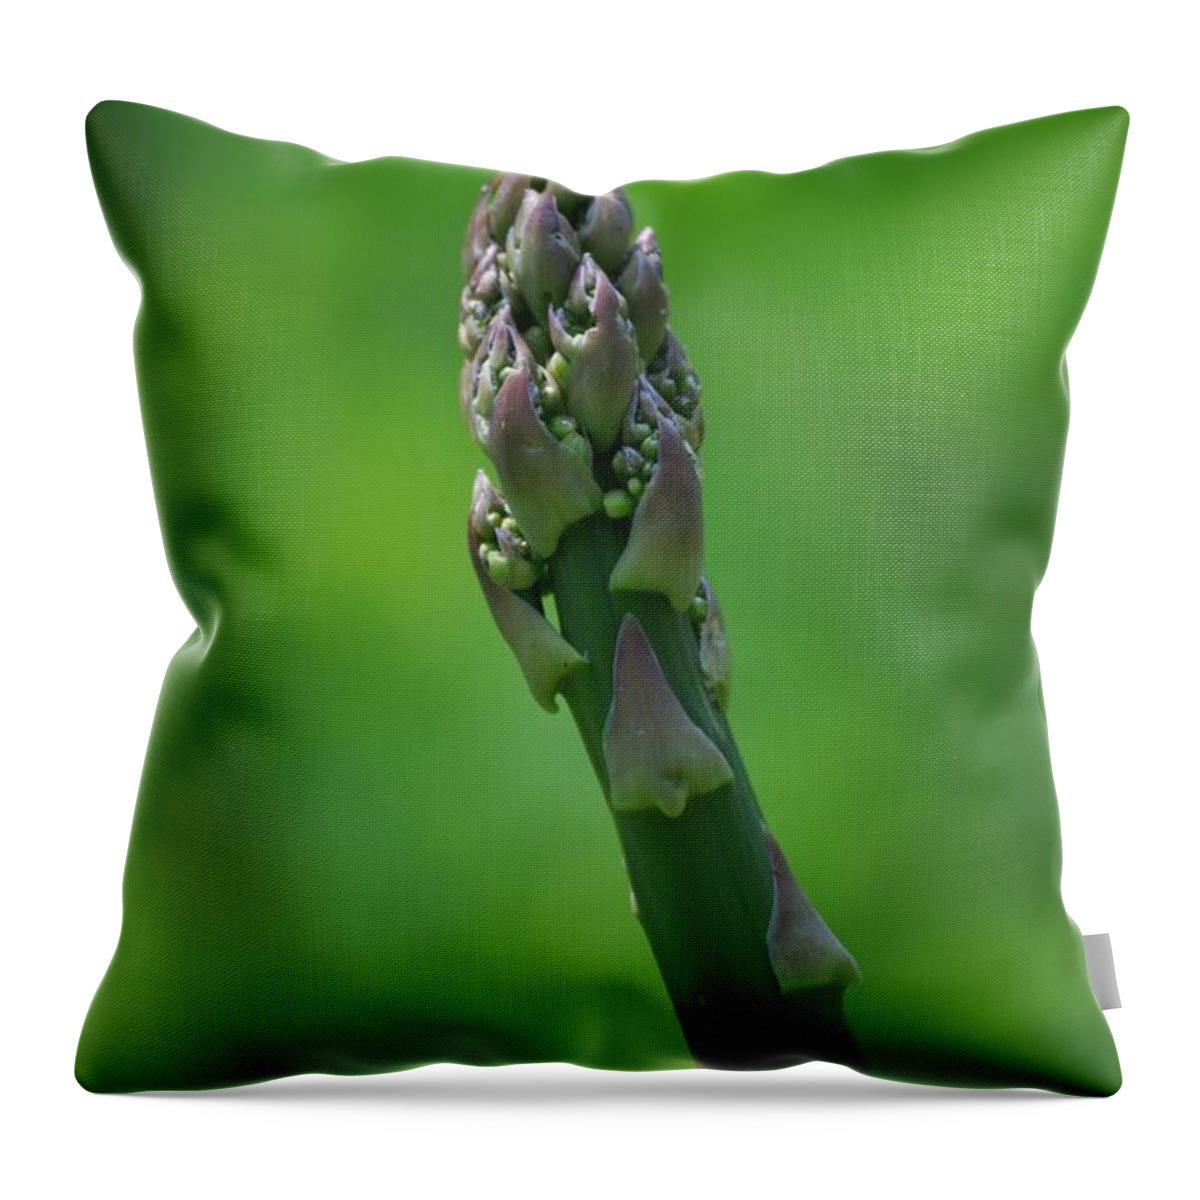 Asparagus Throw Pillow featuring the photograph Fresh Asparagus by Randy Bodkins